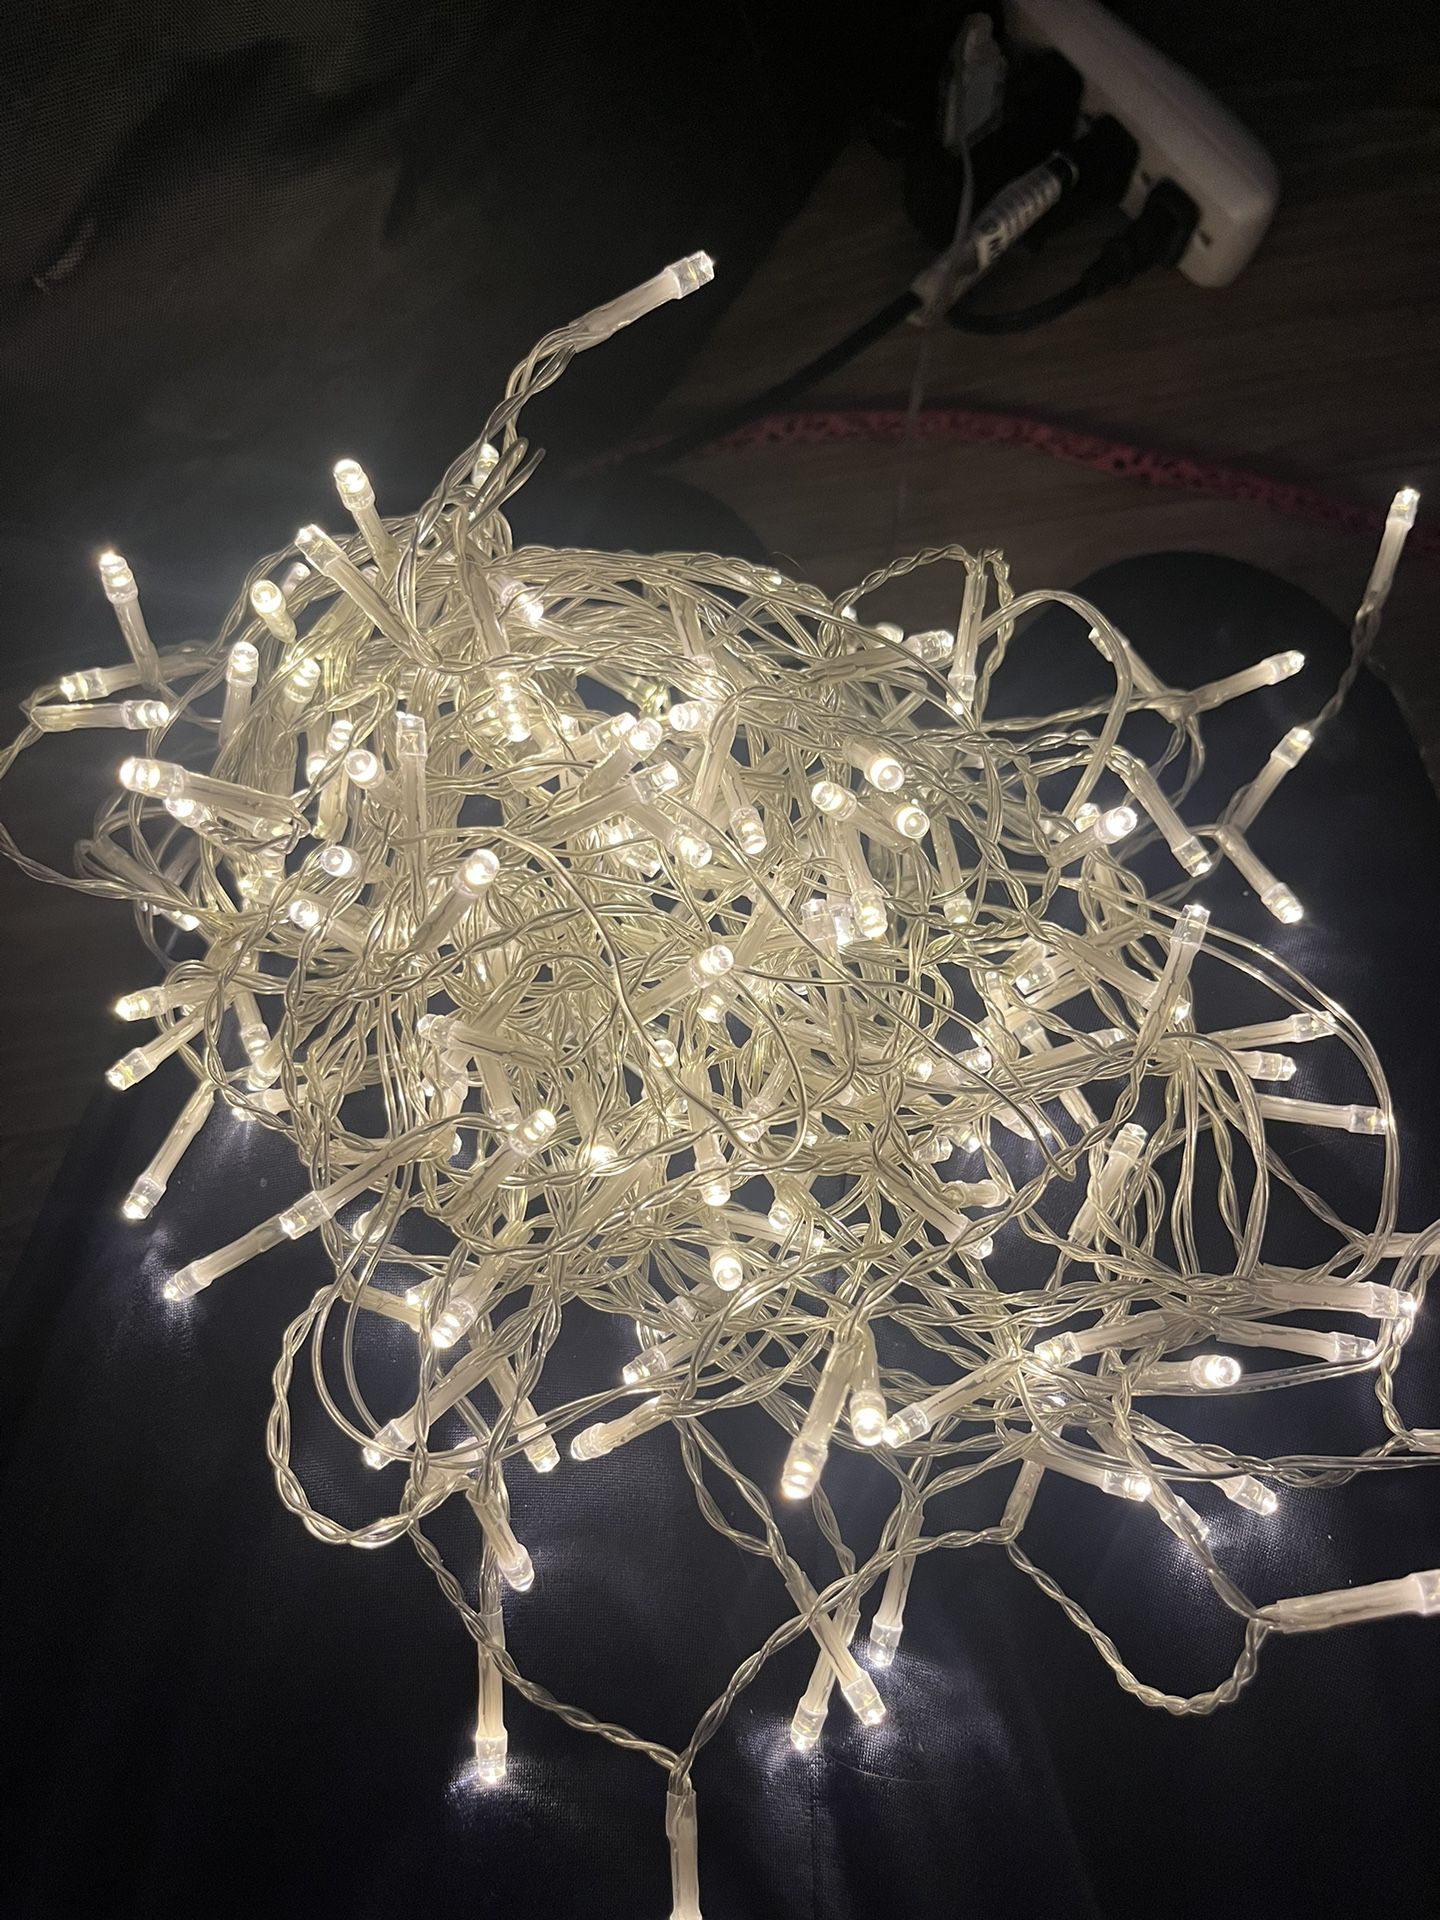 Fairy lights (they untangle easily)